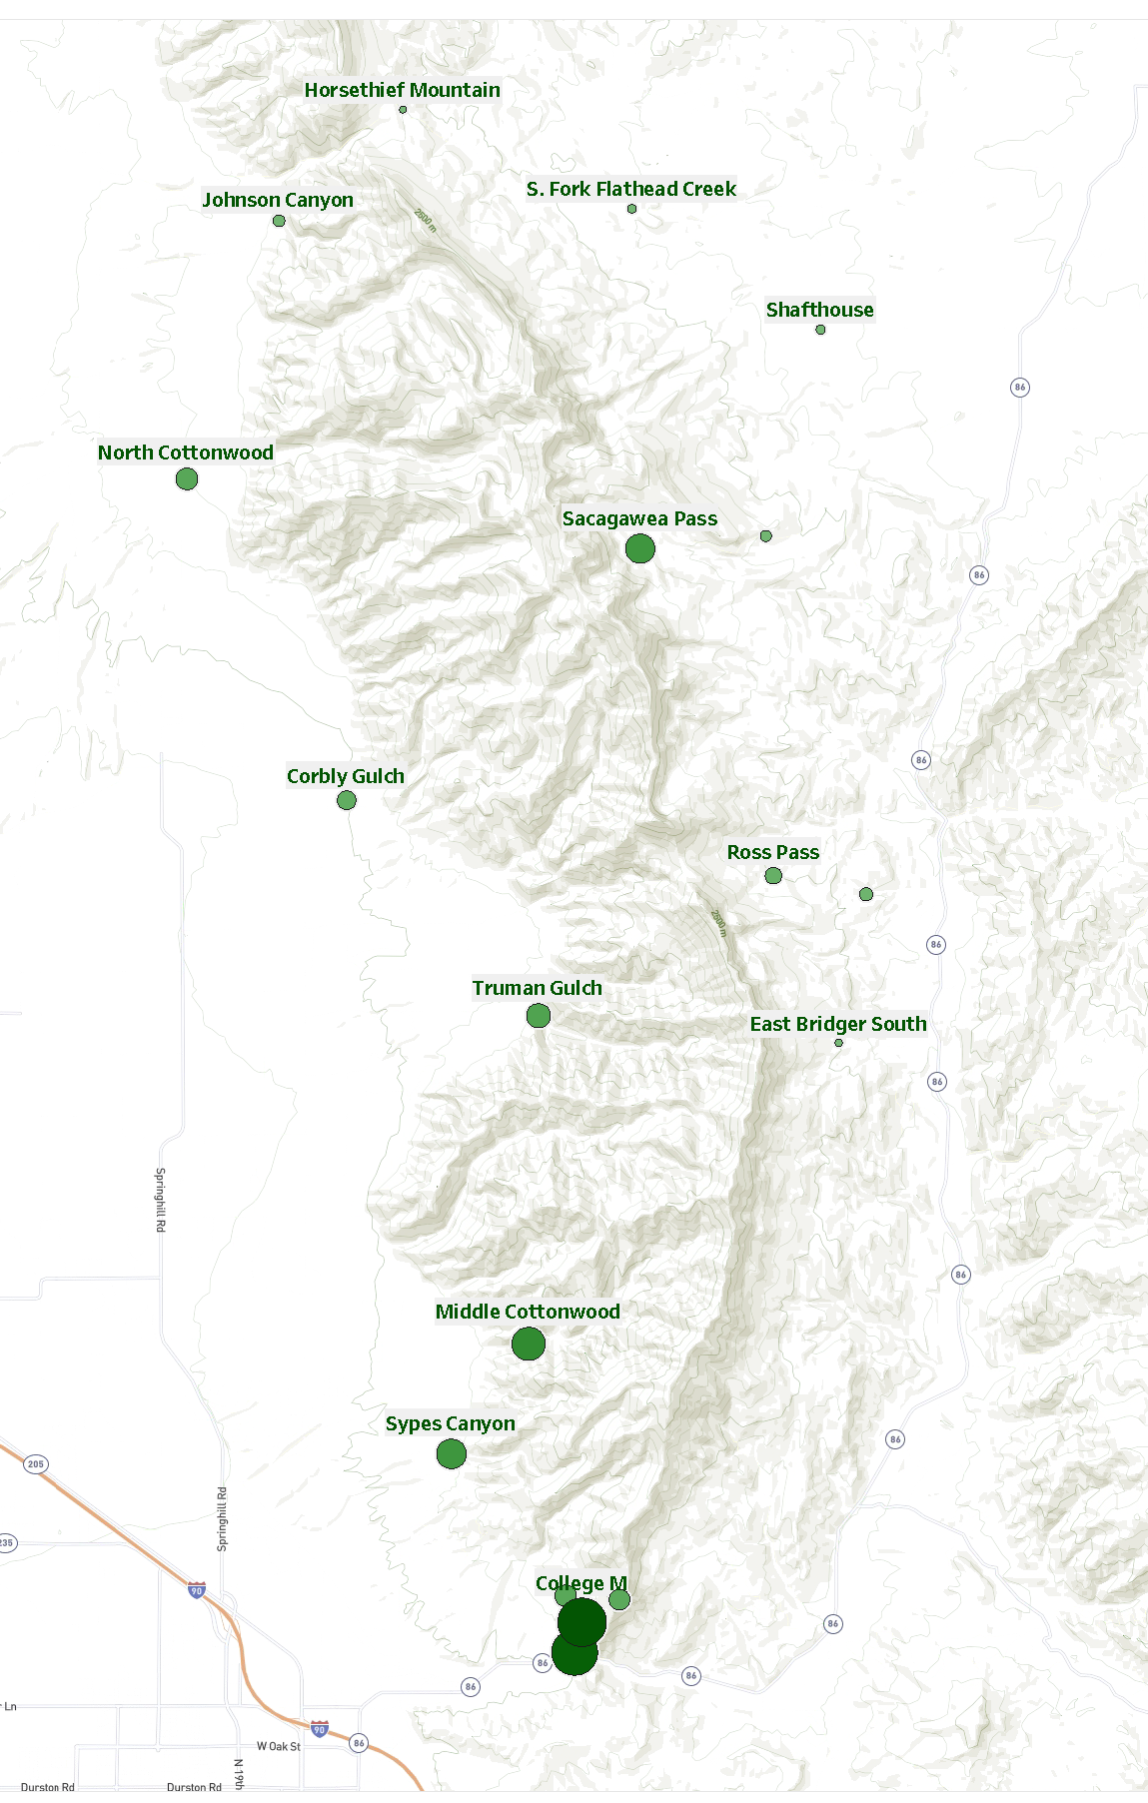 Bridger Mountains trail use study